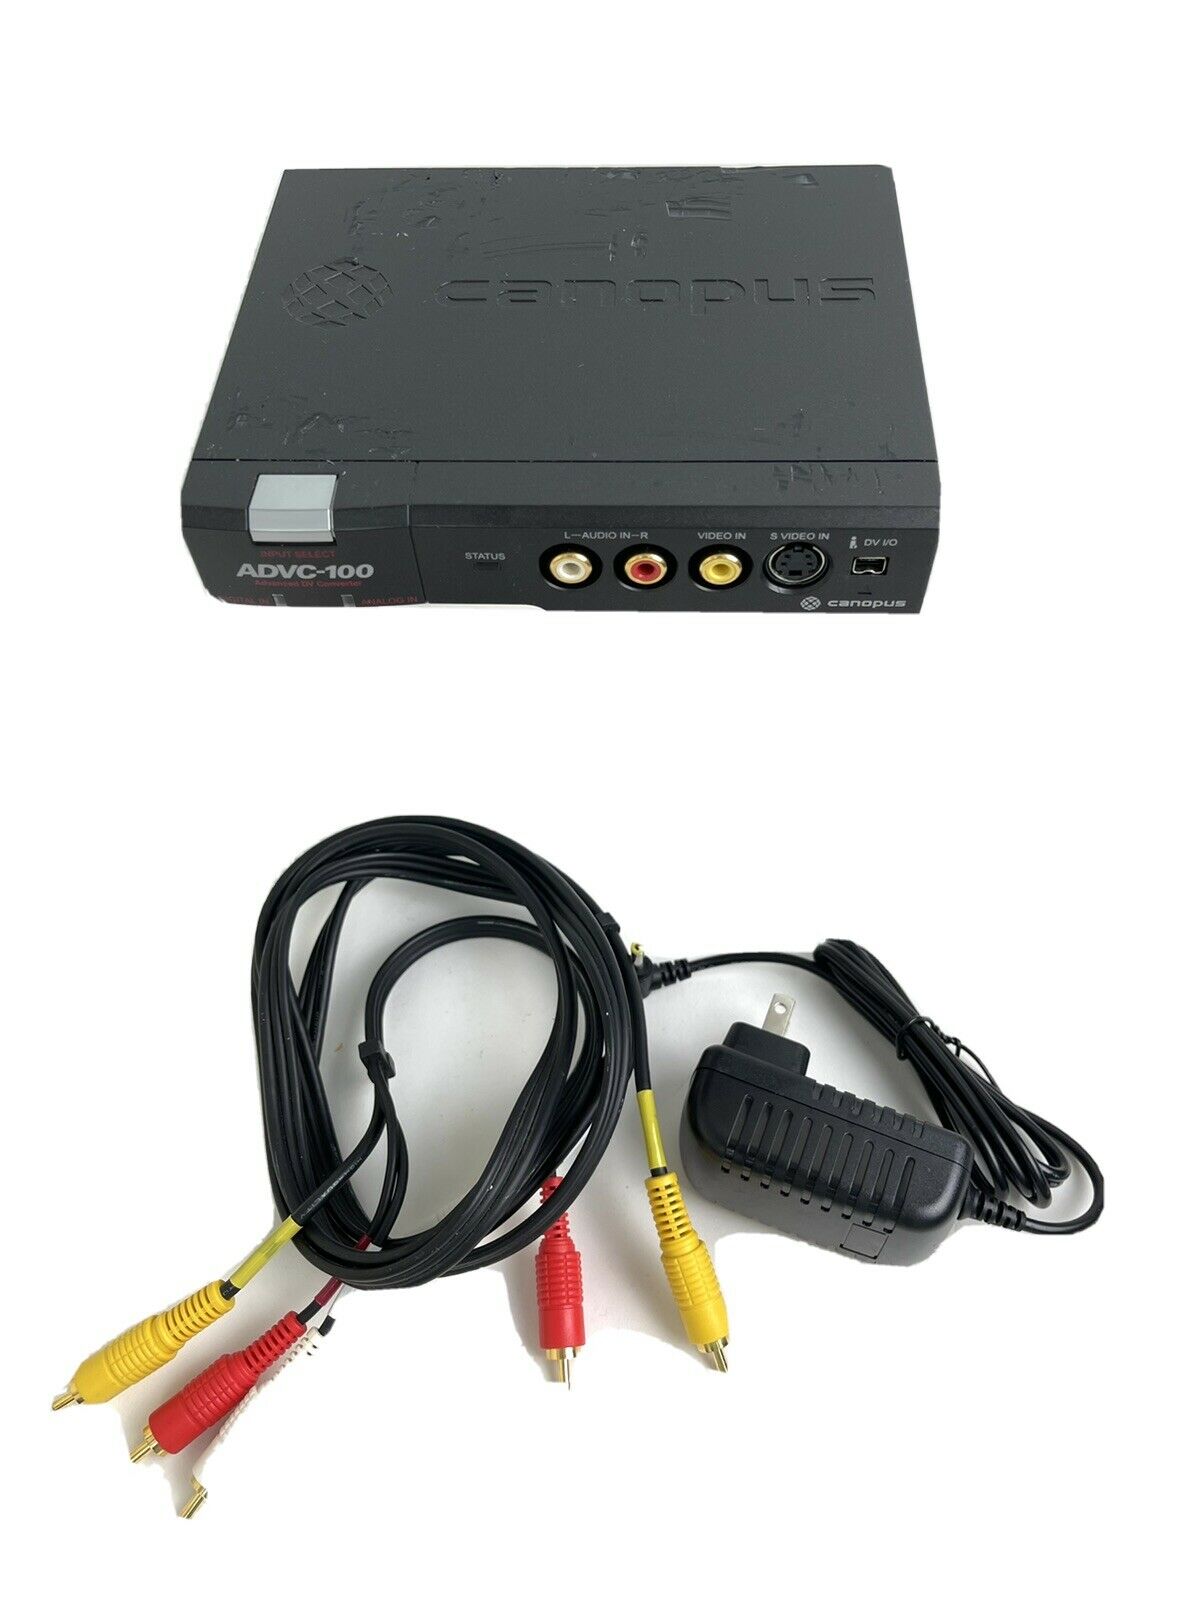 Canopus Advc-100 Analog To Digital Video Converter